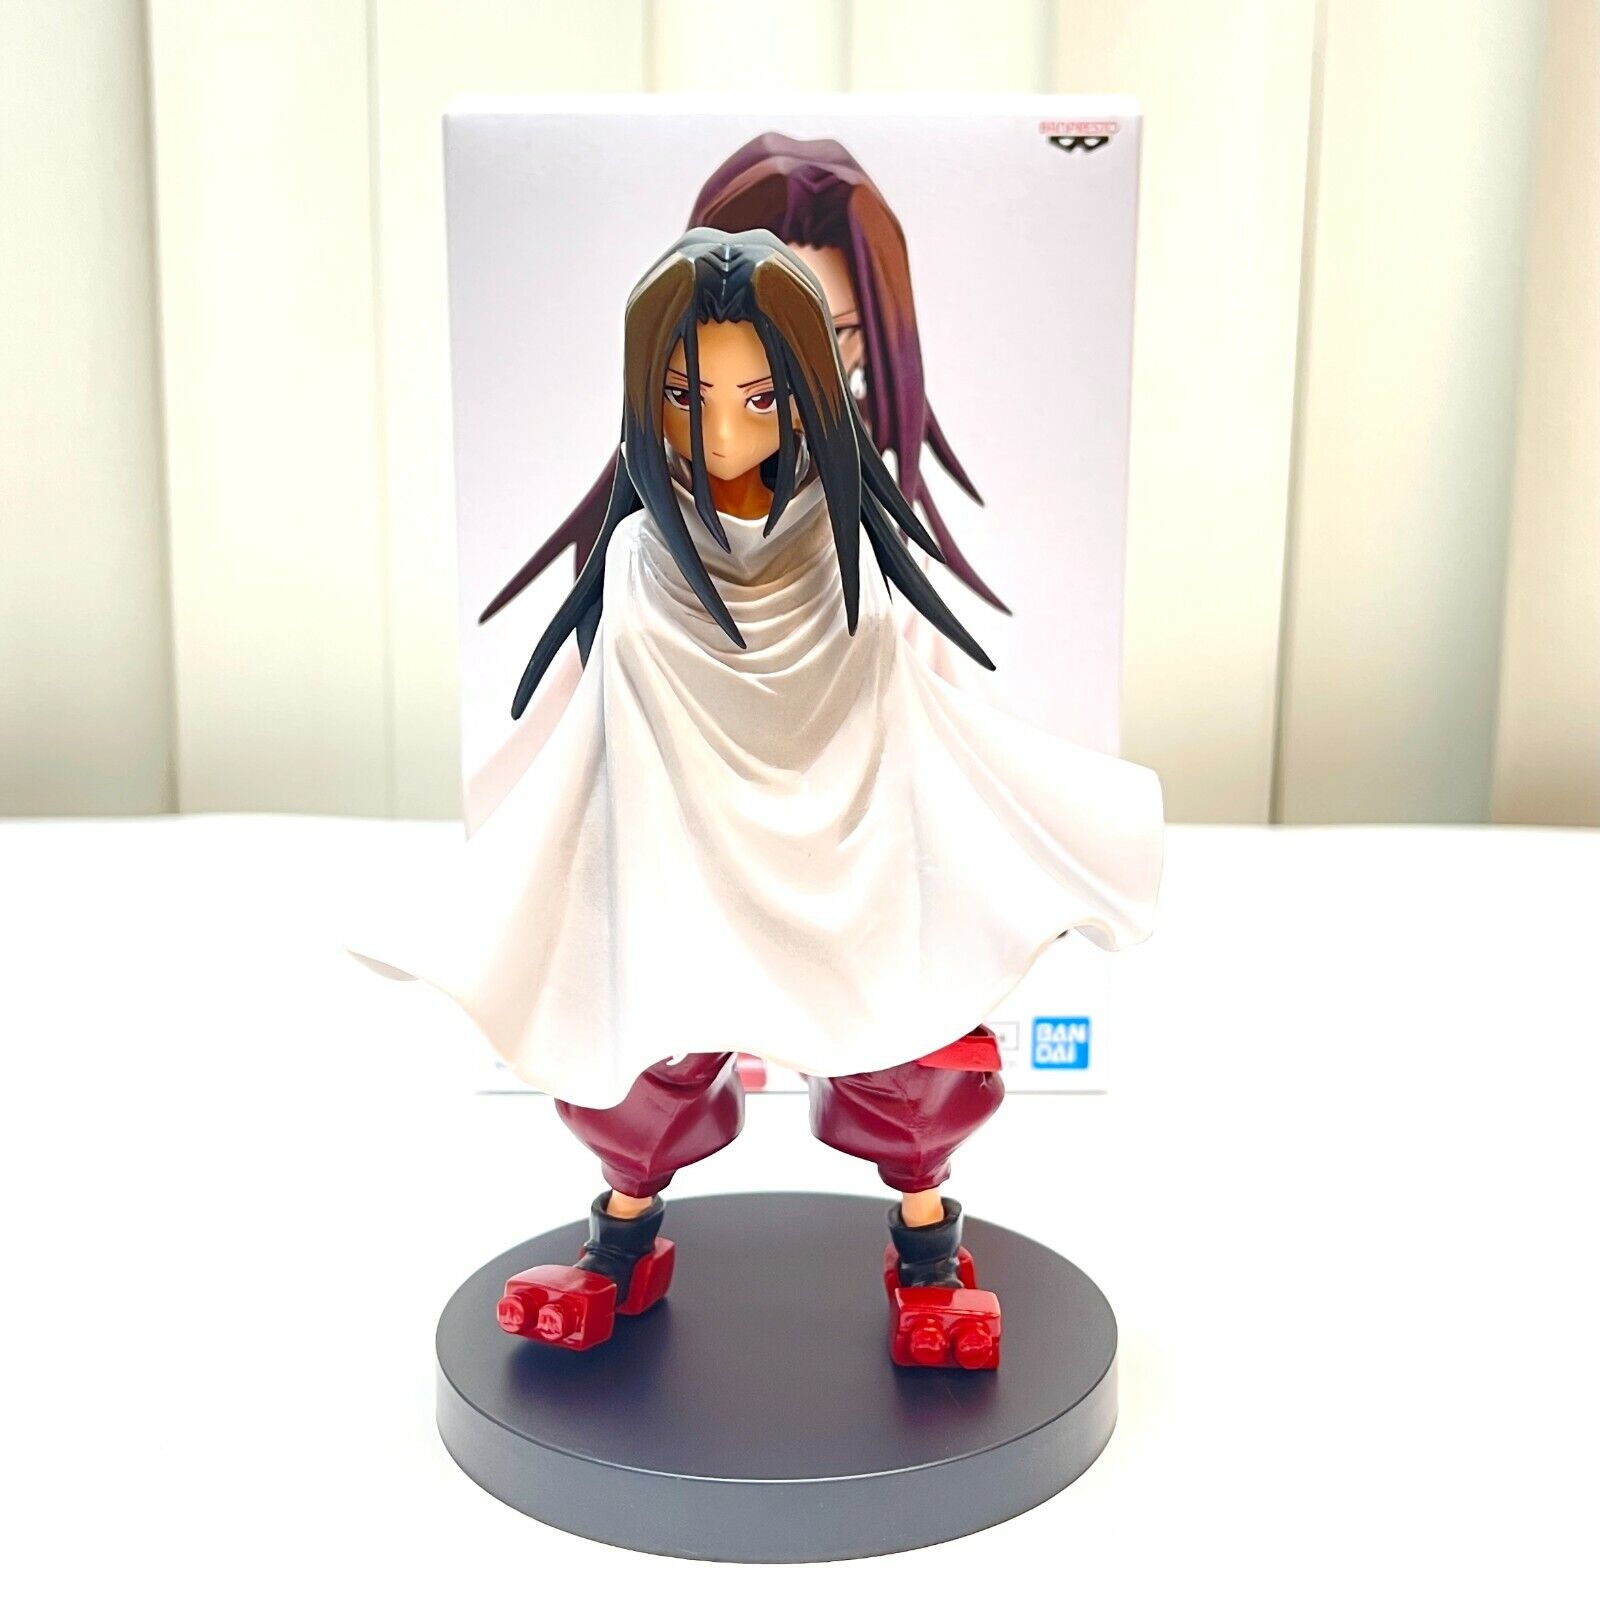 Banpresto Shaman King Anime Figure Statue Toy Asakura Hao BP17950